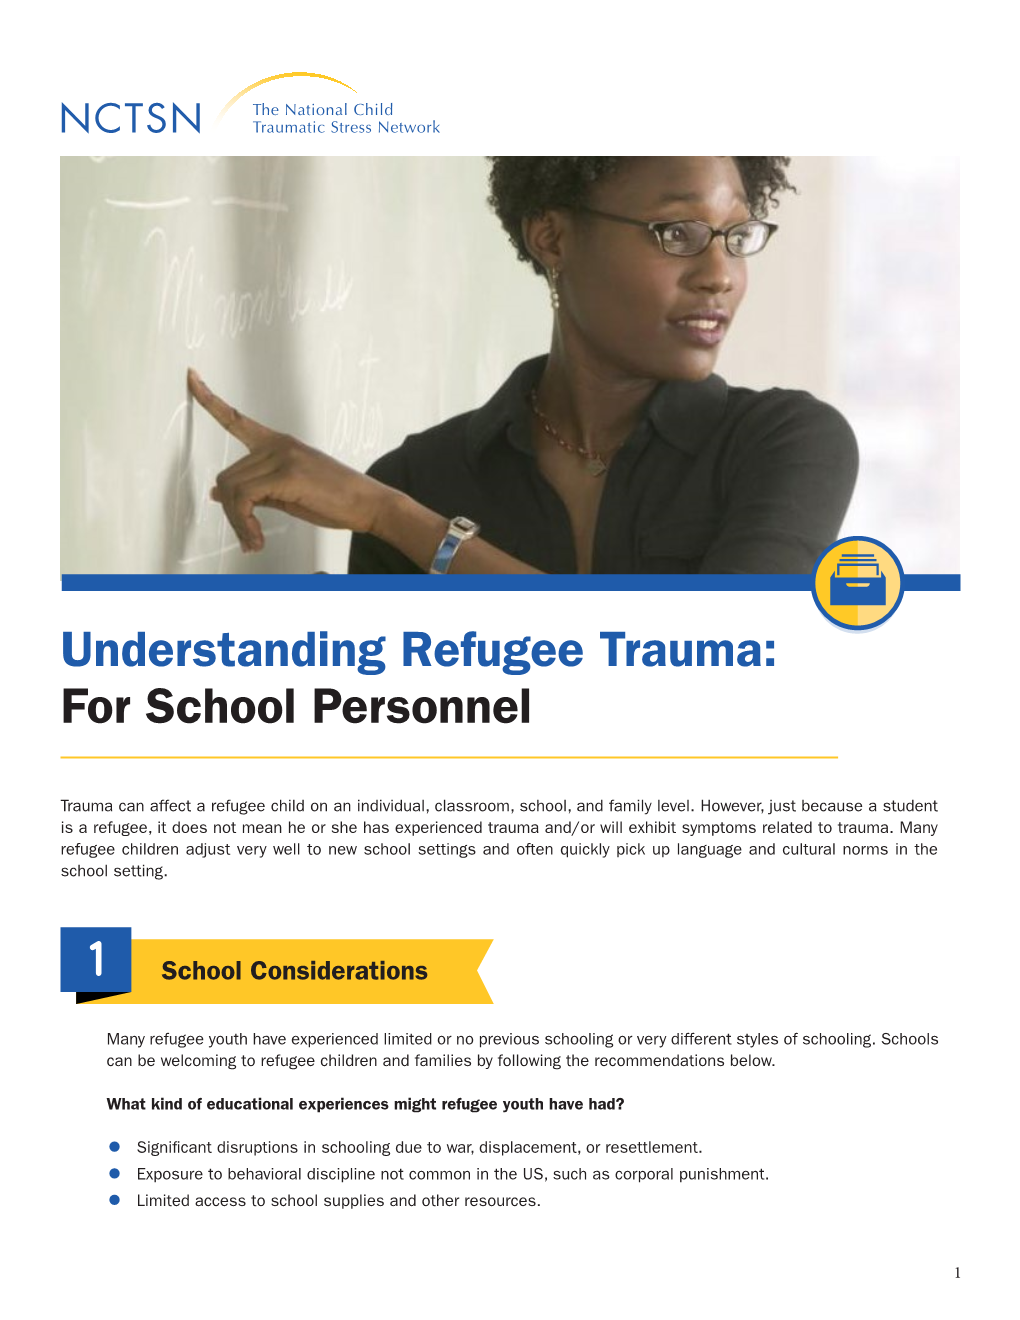 Understanding Refugee Trauma: for School Personnel